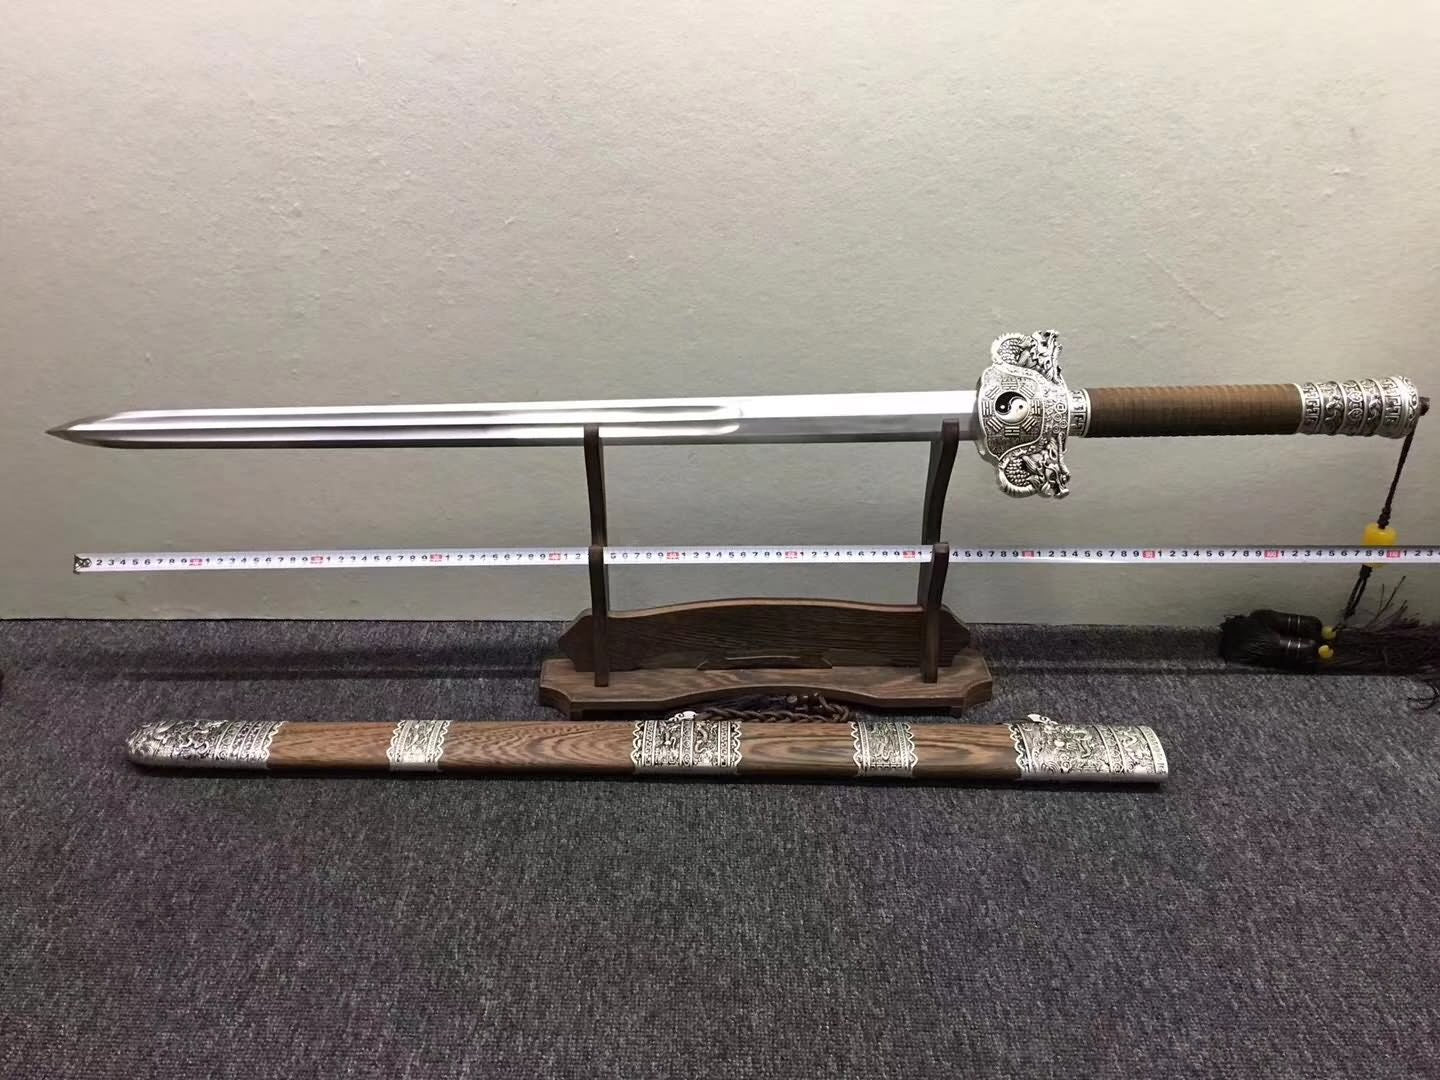 Bagua jian sword,High carbon steel blade,Rosewood scabbard - Chinese sword shop